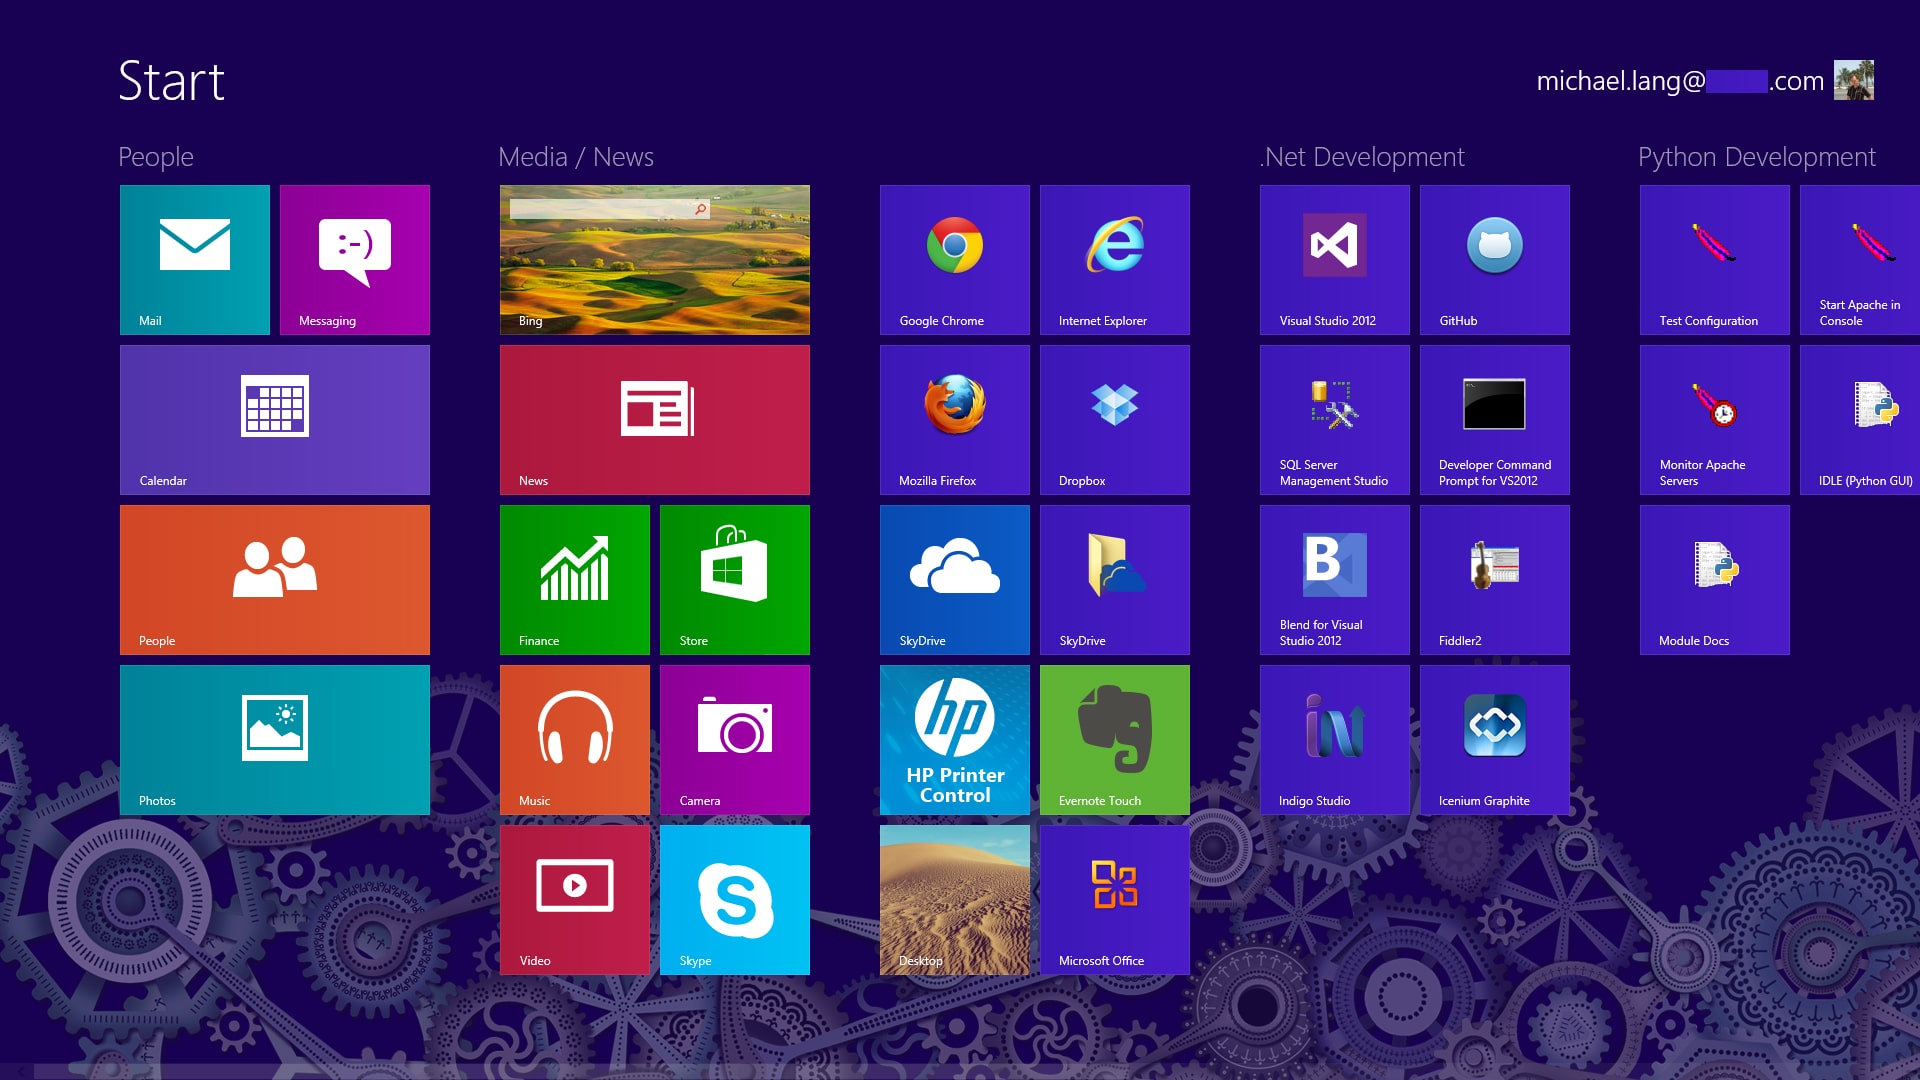 Microsoft Windows 8 Metro user interface